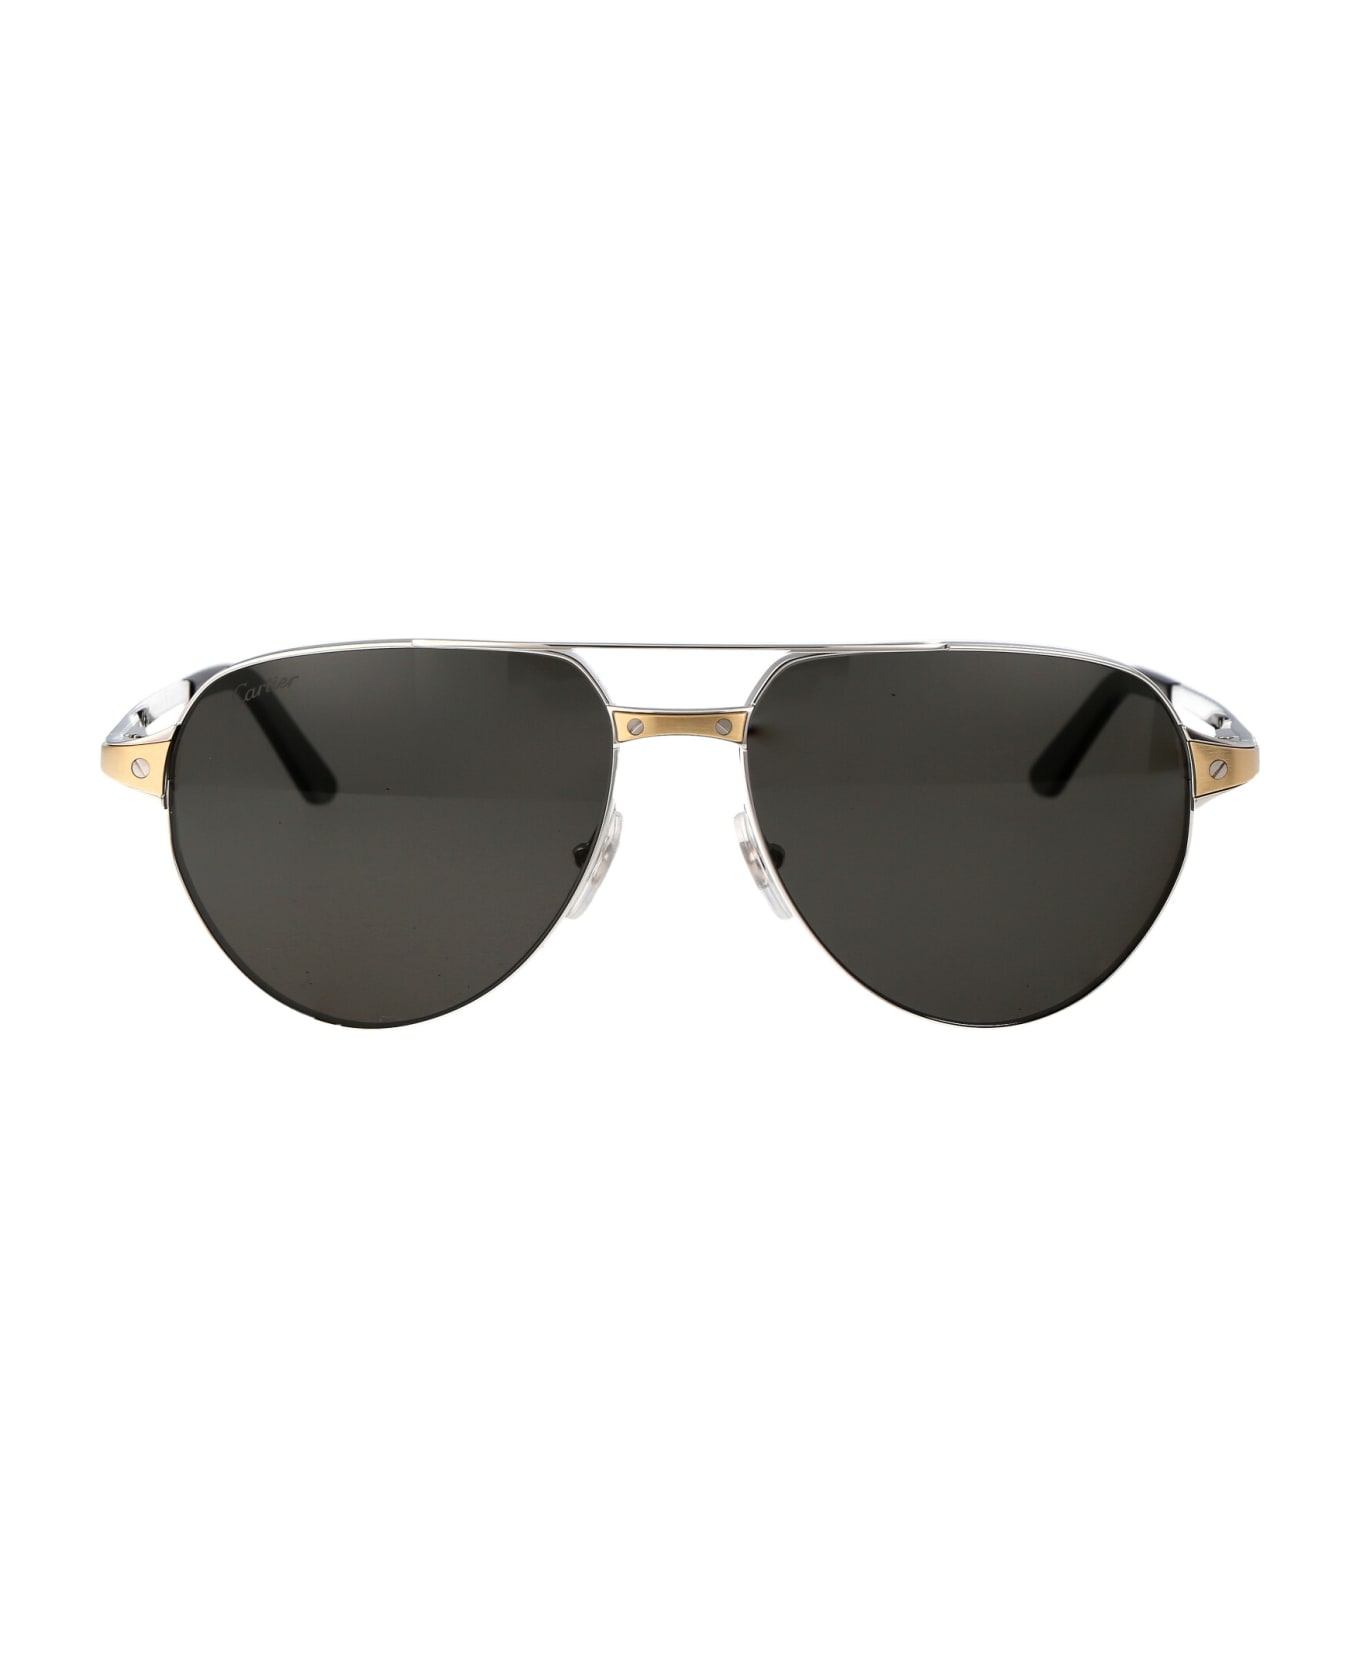 Cartier Eyewear Ct0425s Sunglasses - 001 SILVER SILVER SMOKE